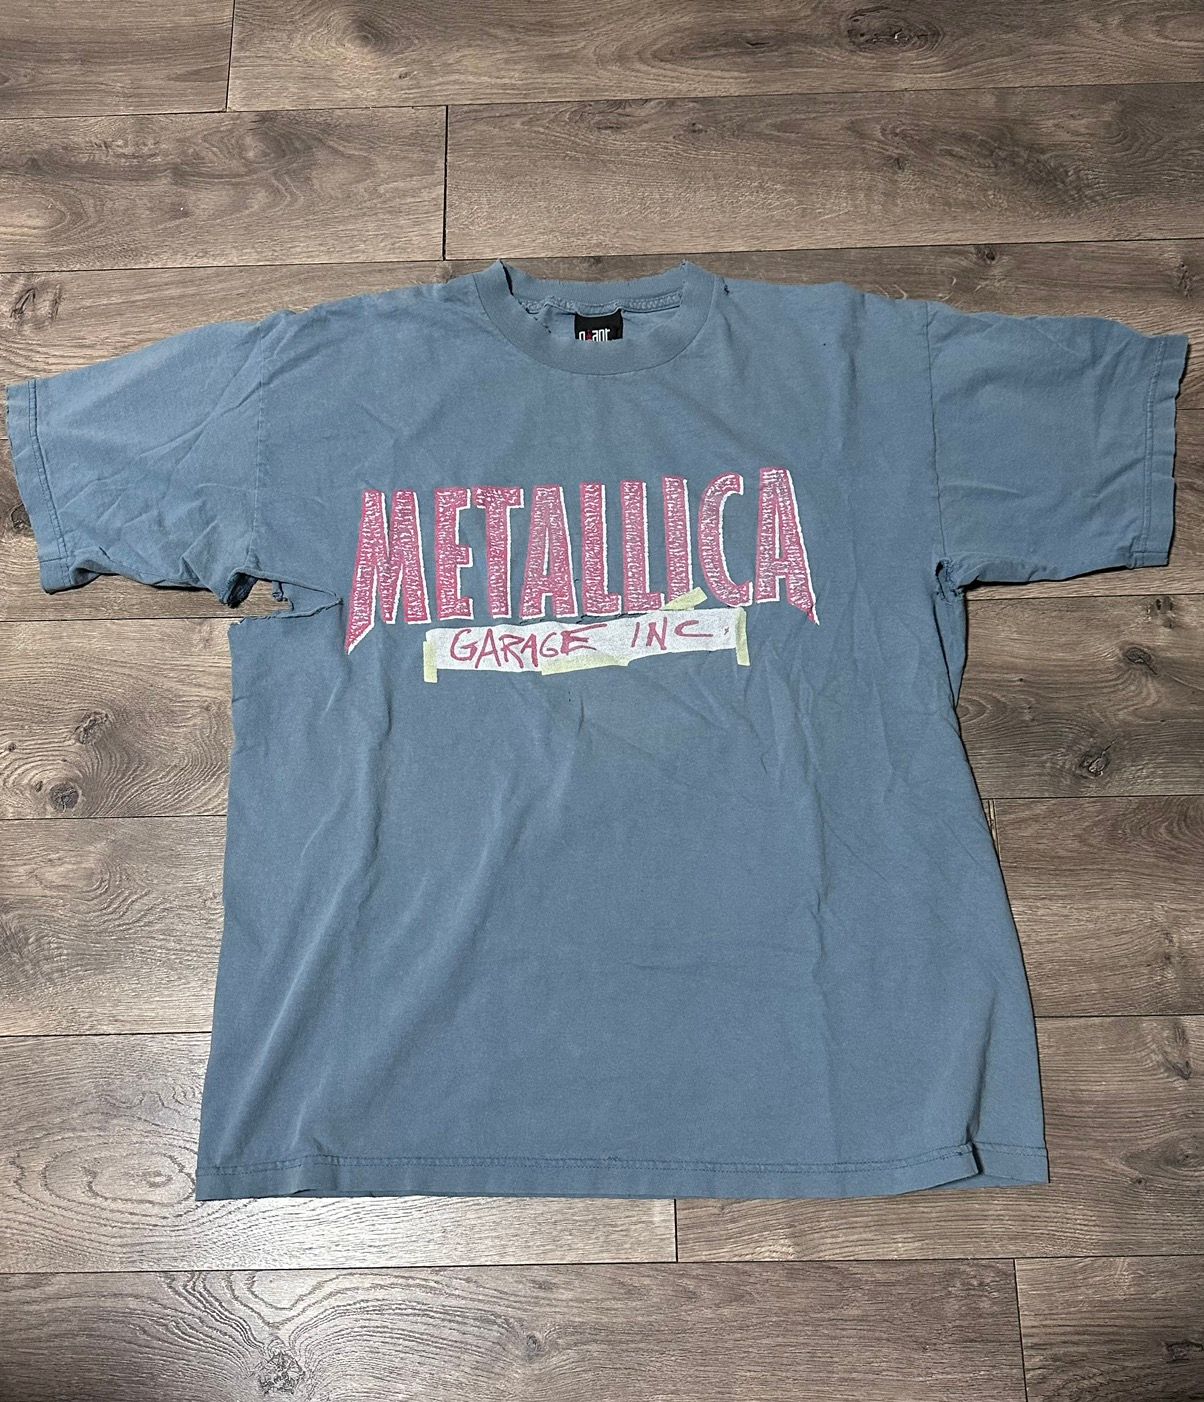 Vintage Vintage 90s Metallica garage inc band tee shirt faded